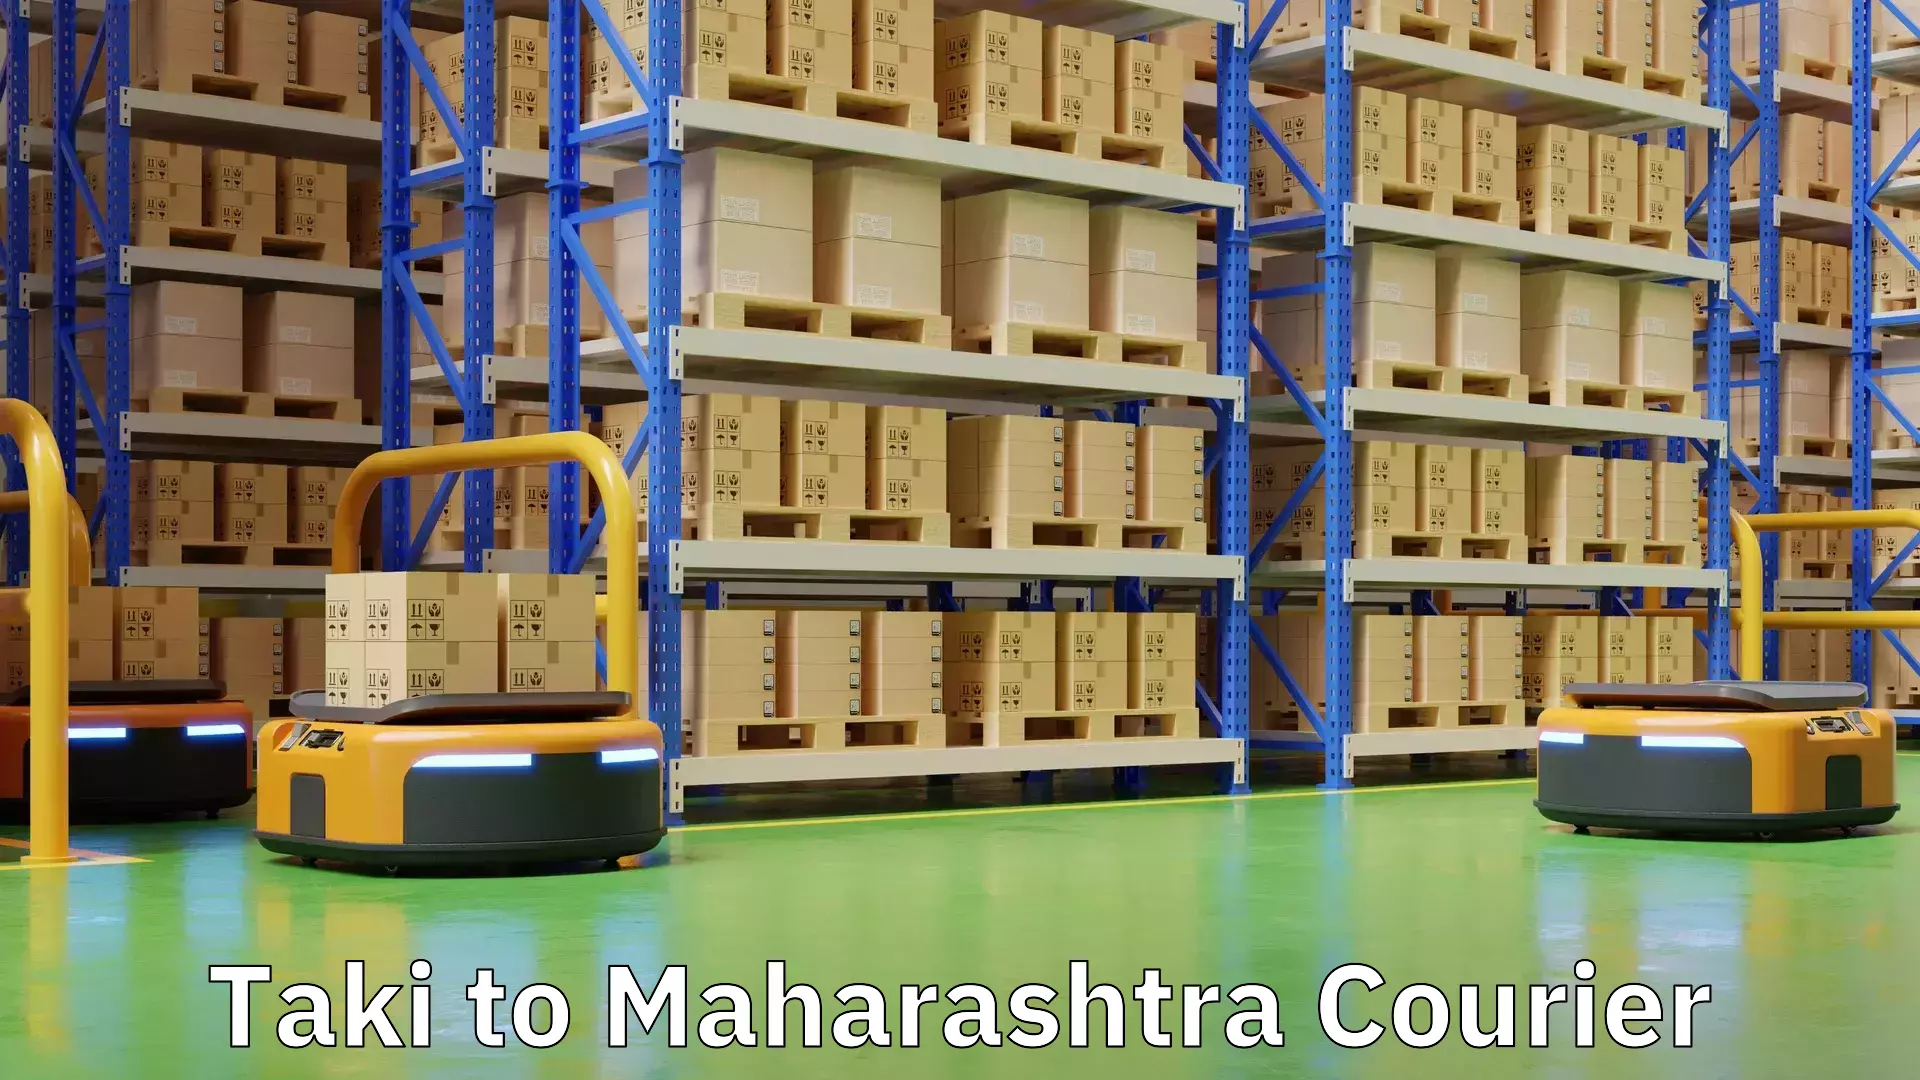 Same-day delivery solutions Taki to Maharashtra